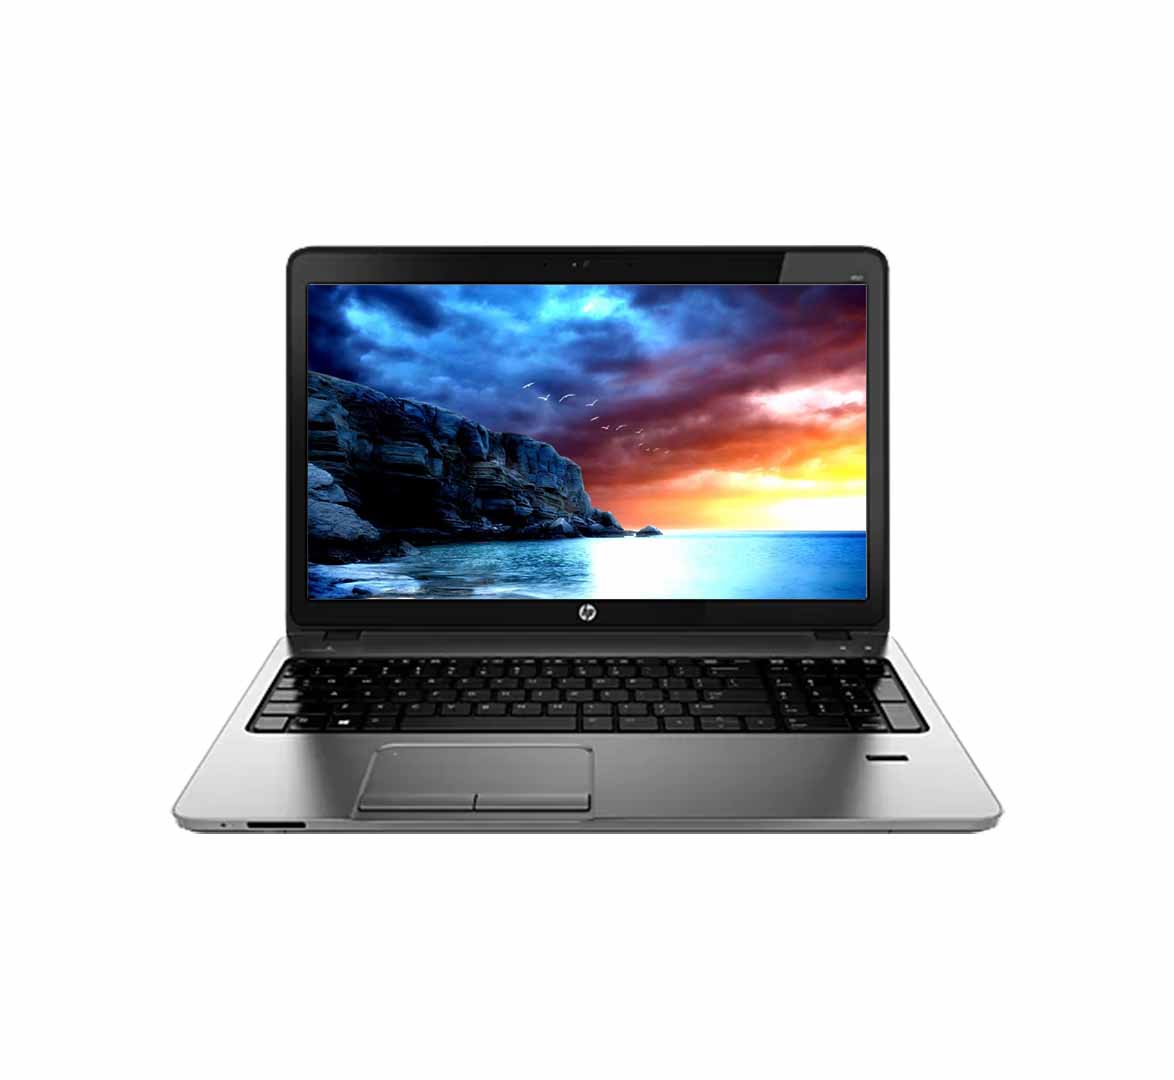 HP ProBook 450 G1, Intel Core i5-4th Generation CPU, 8GB RAM, 500GB HDD, AMD RADEON 8750M, 15.6 inch Display, Windows 10 Pro, Refurbished Laptop